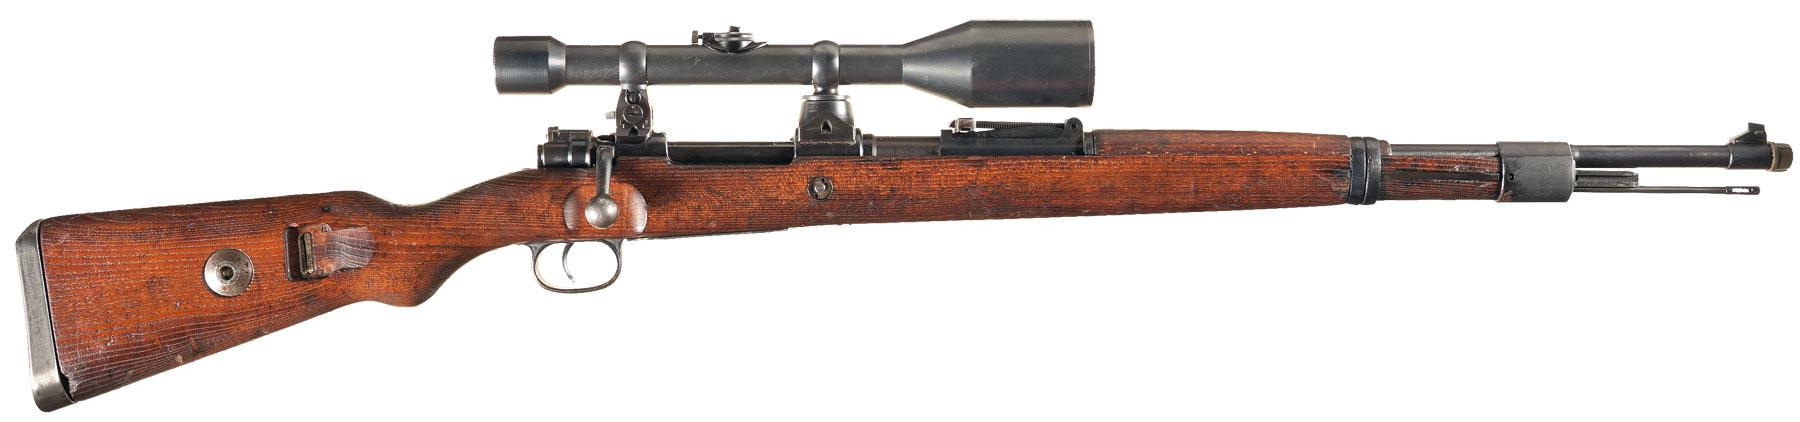 k98 turret sniper